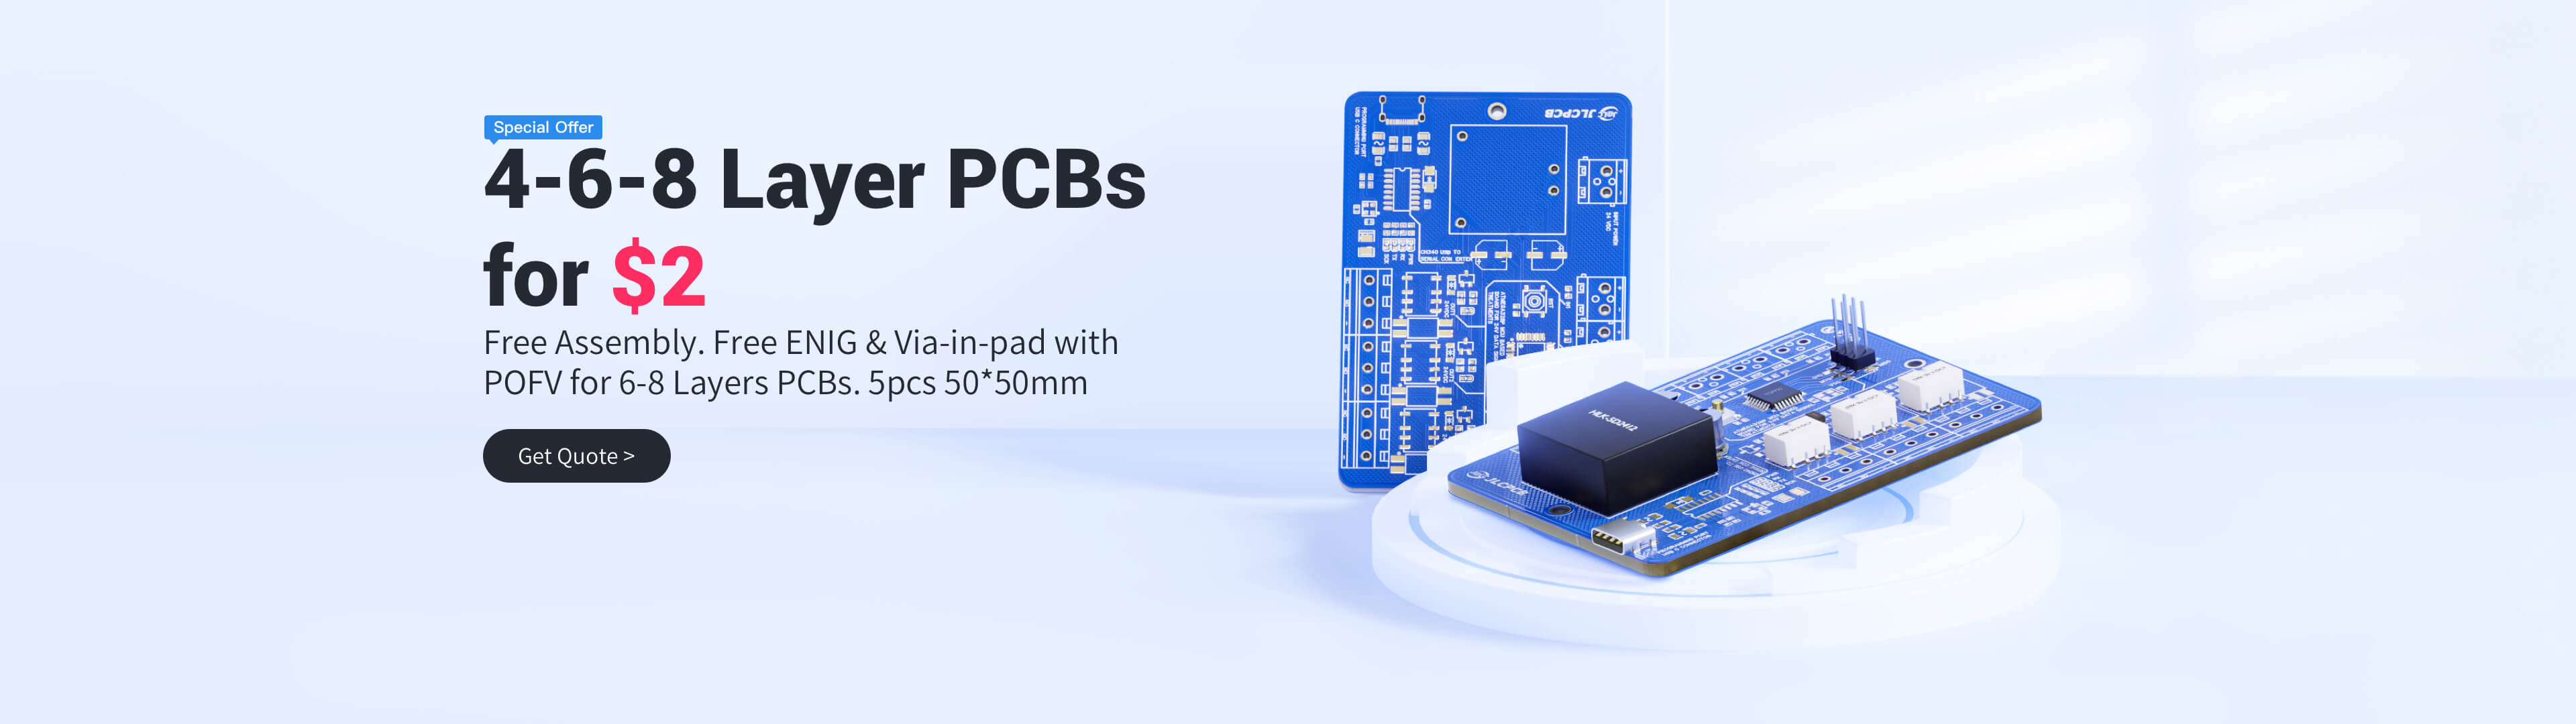 PCB Prototype & PCB Fabrication Manufacturer - JLCPCB